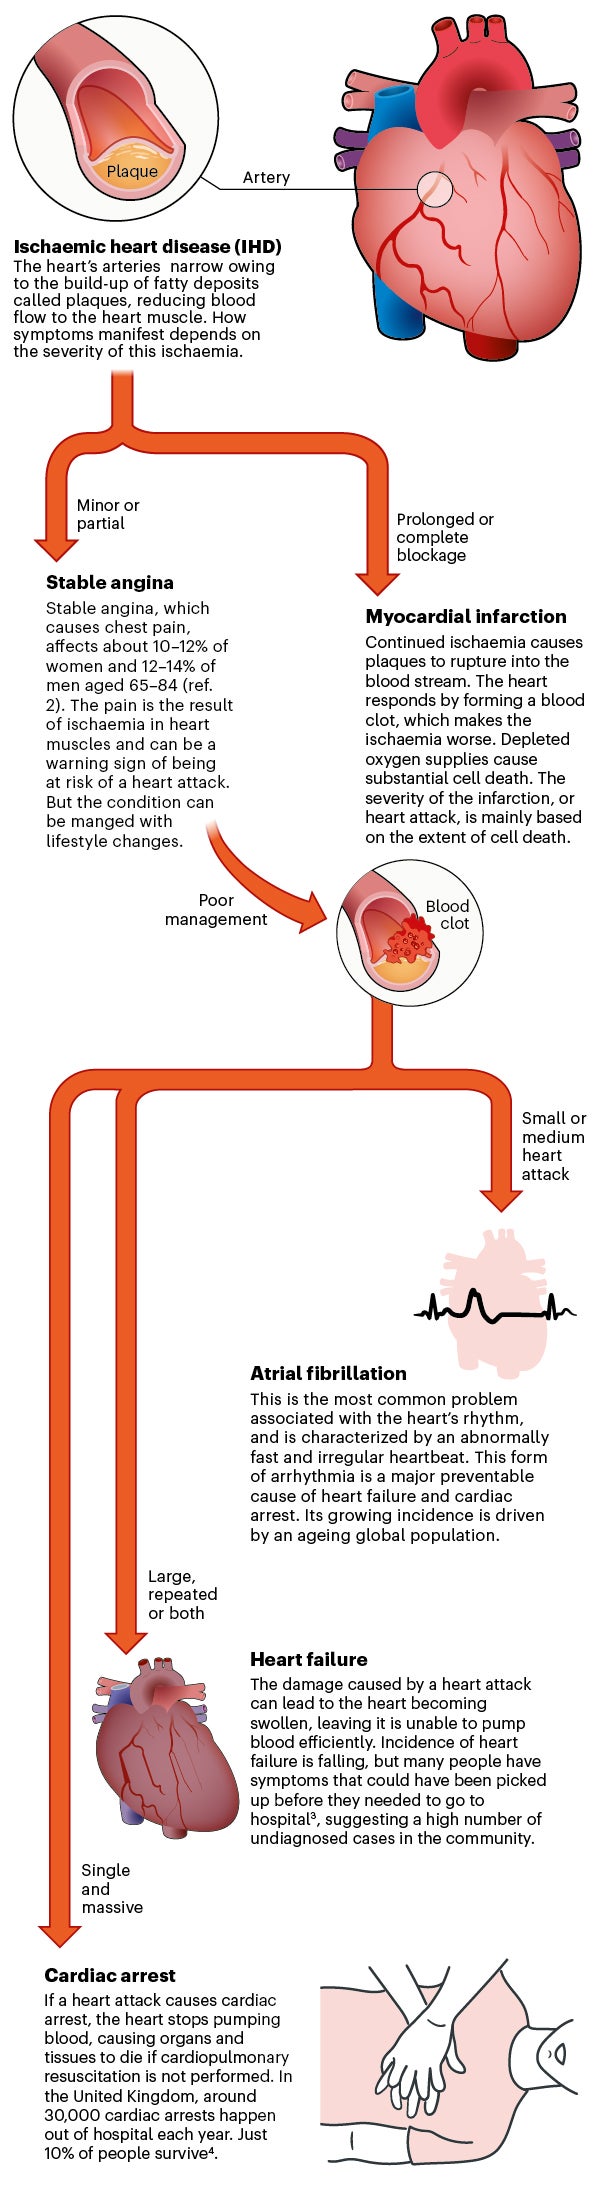 Infographic detailing the development of ischaemic heart disease.